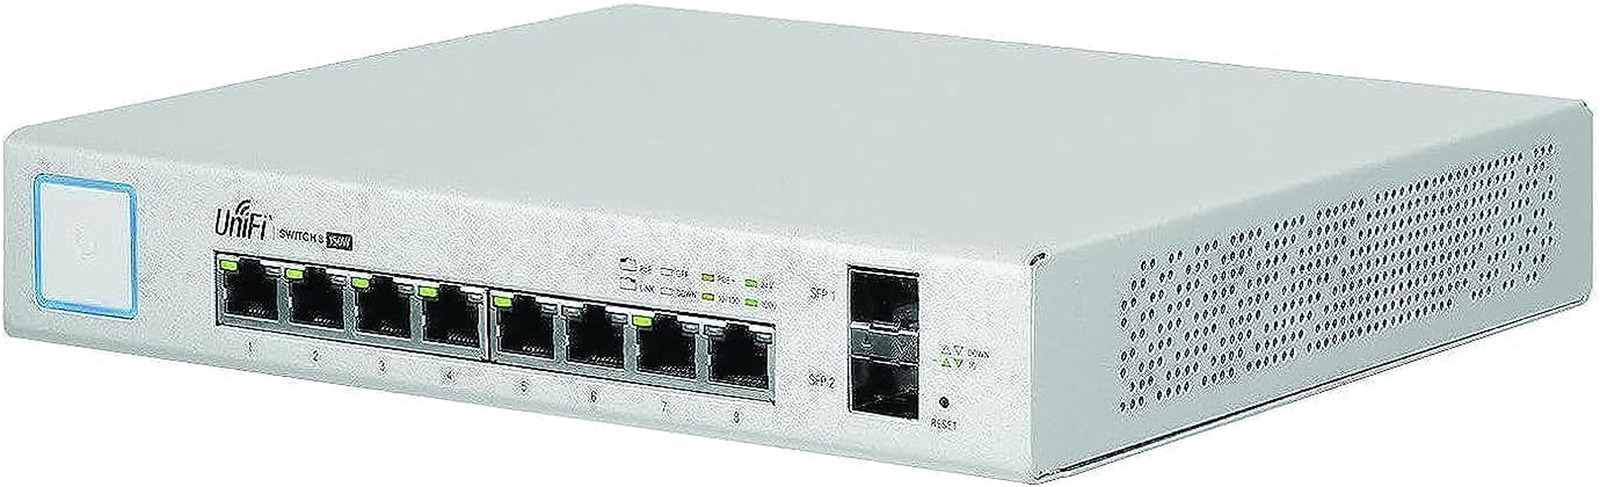 Networks Unifi Switch 8-Port 150 Watts, White